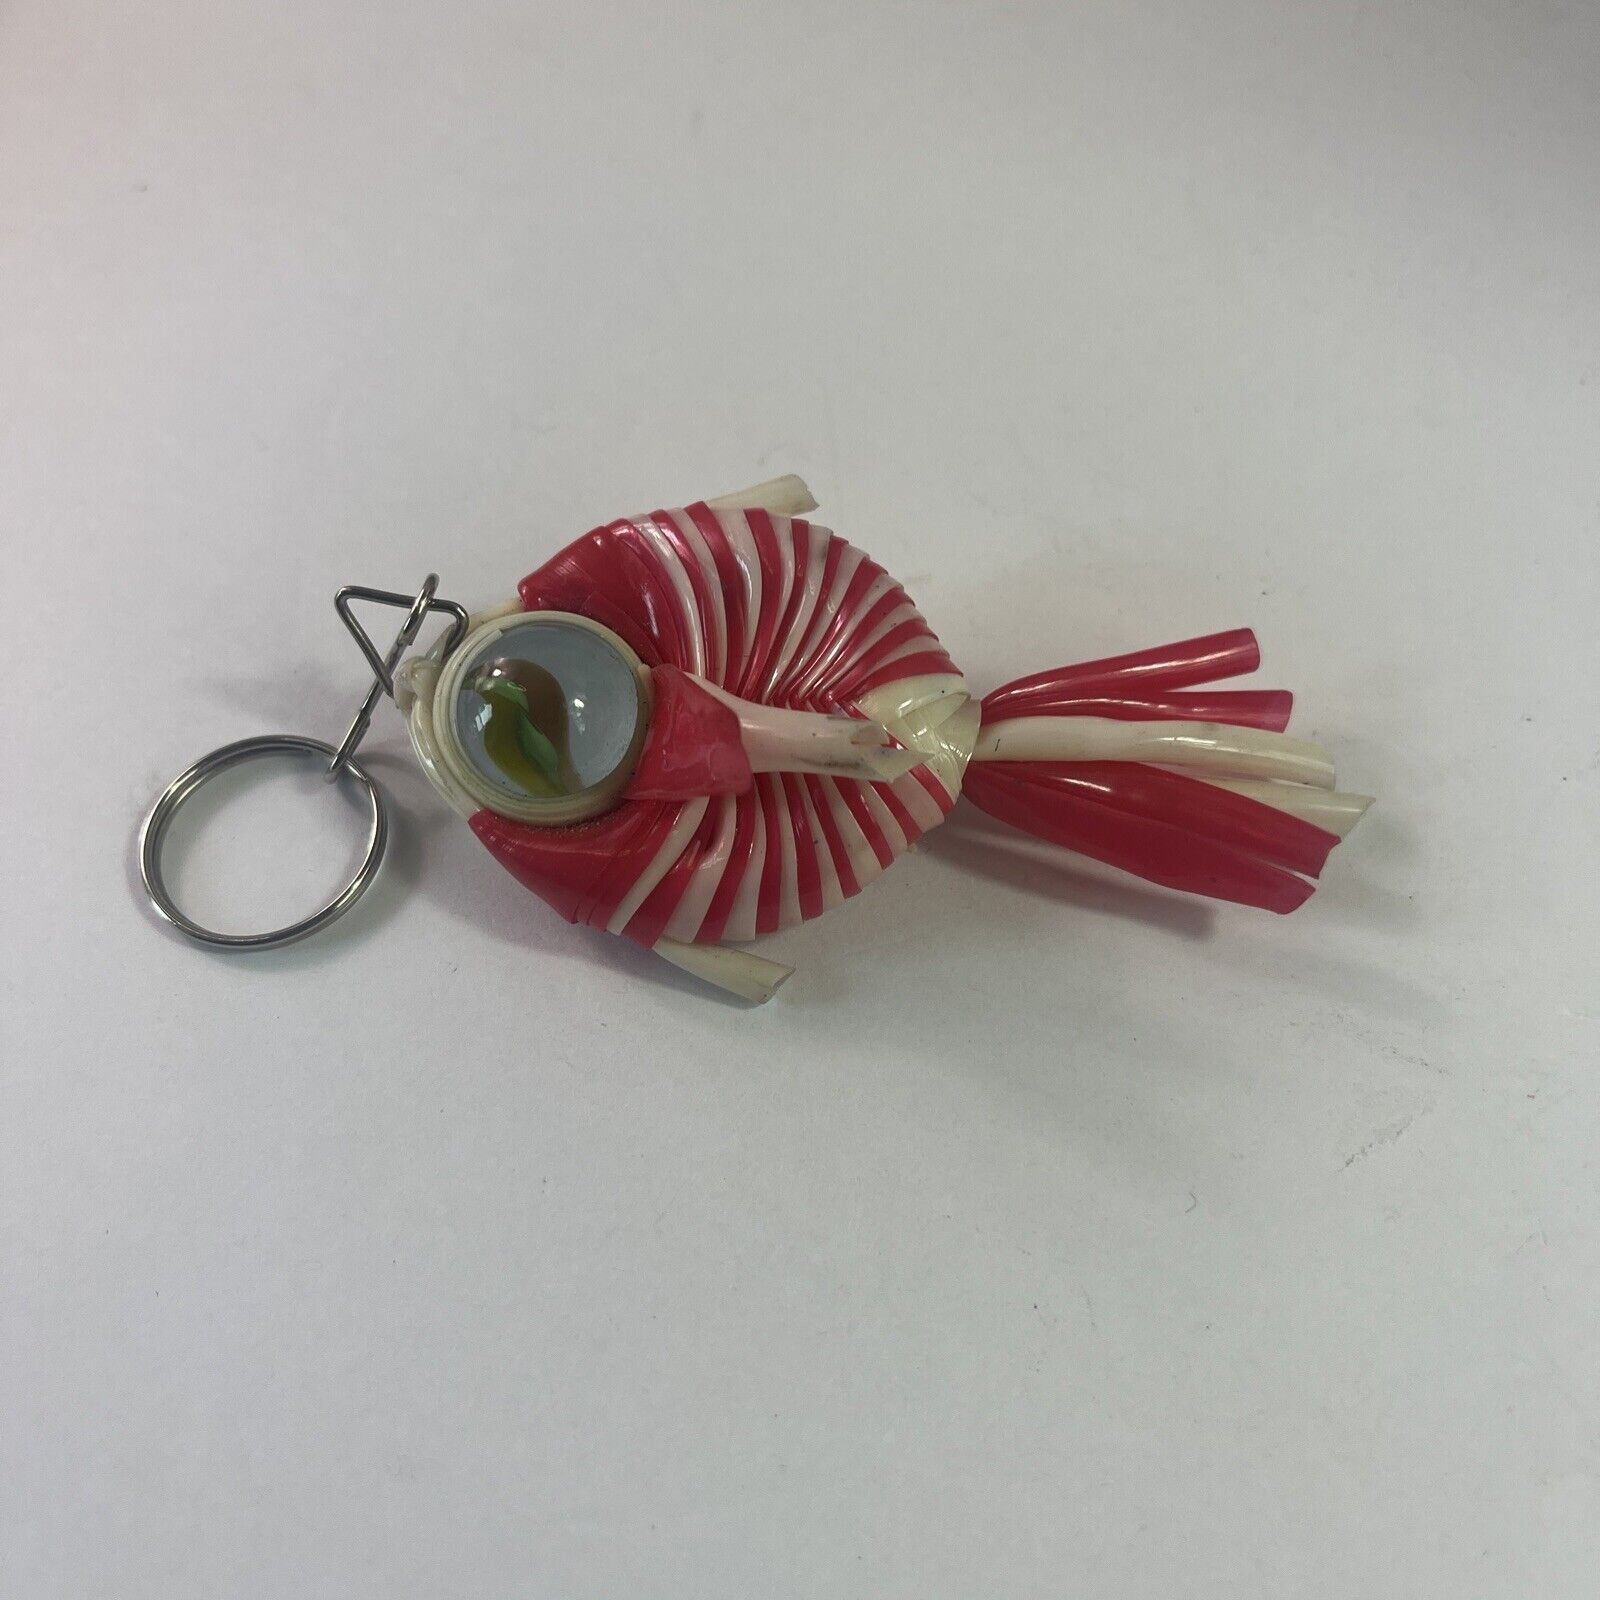 Strange Handmade Fish Keychain Marble eye Vintage White Red